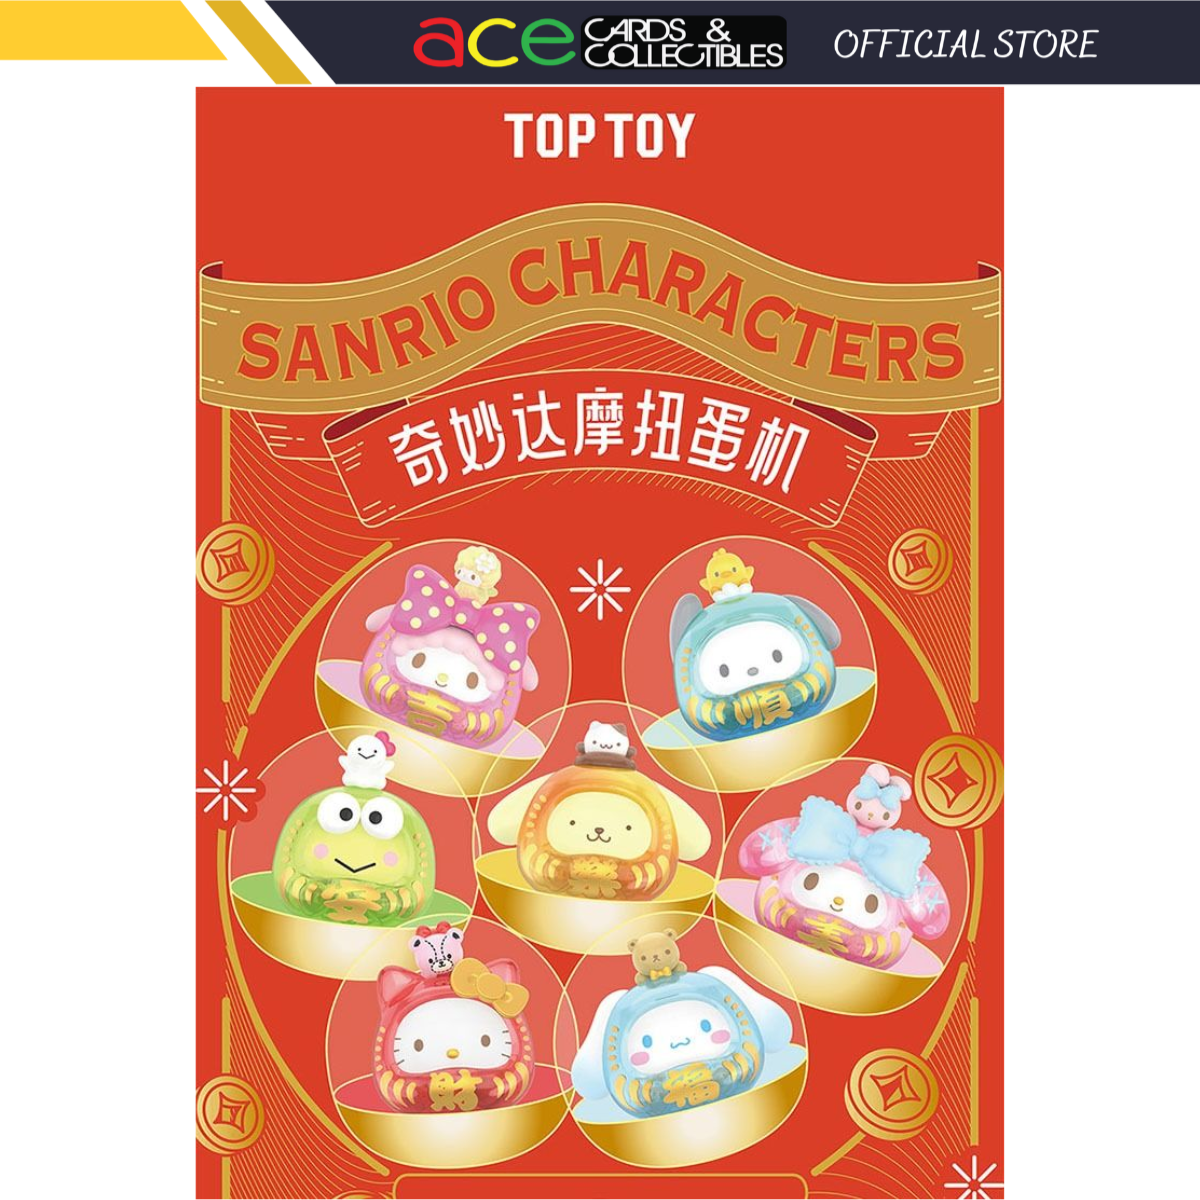 Sanrio Characters Dharma Gacha Machine Series-Single Box (Random)-TopToy-Ace Cards & Collectibles